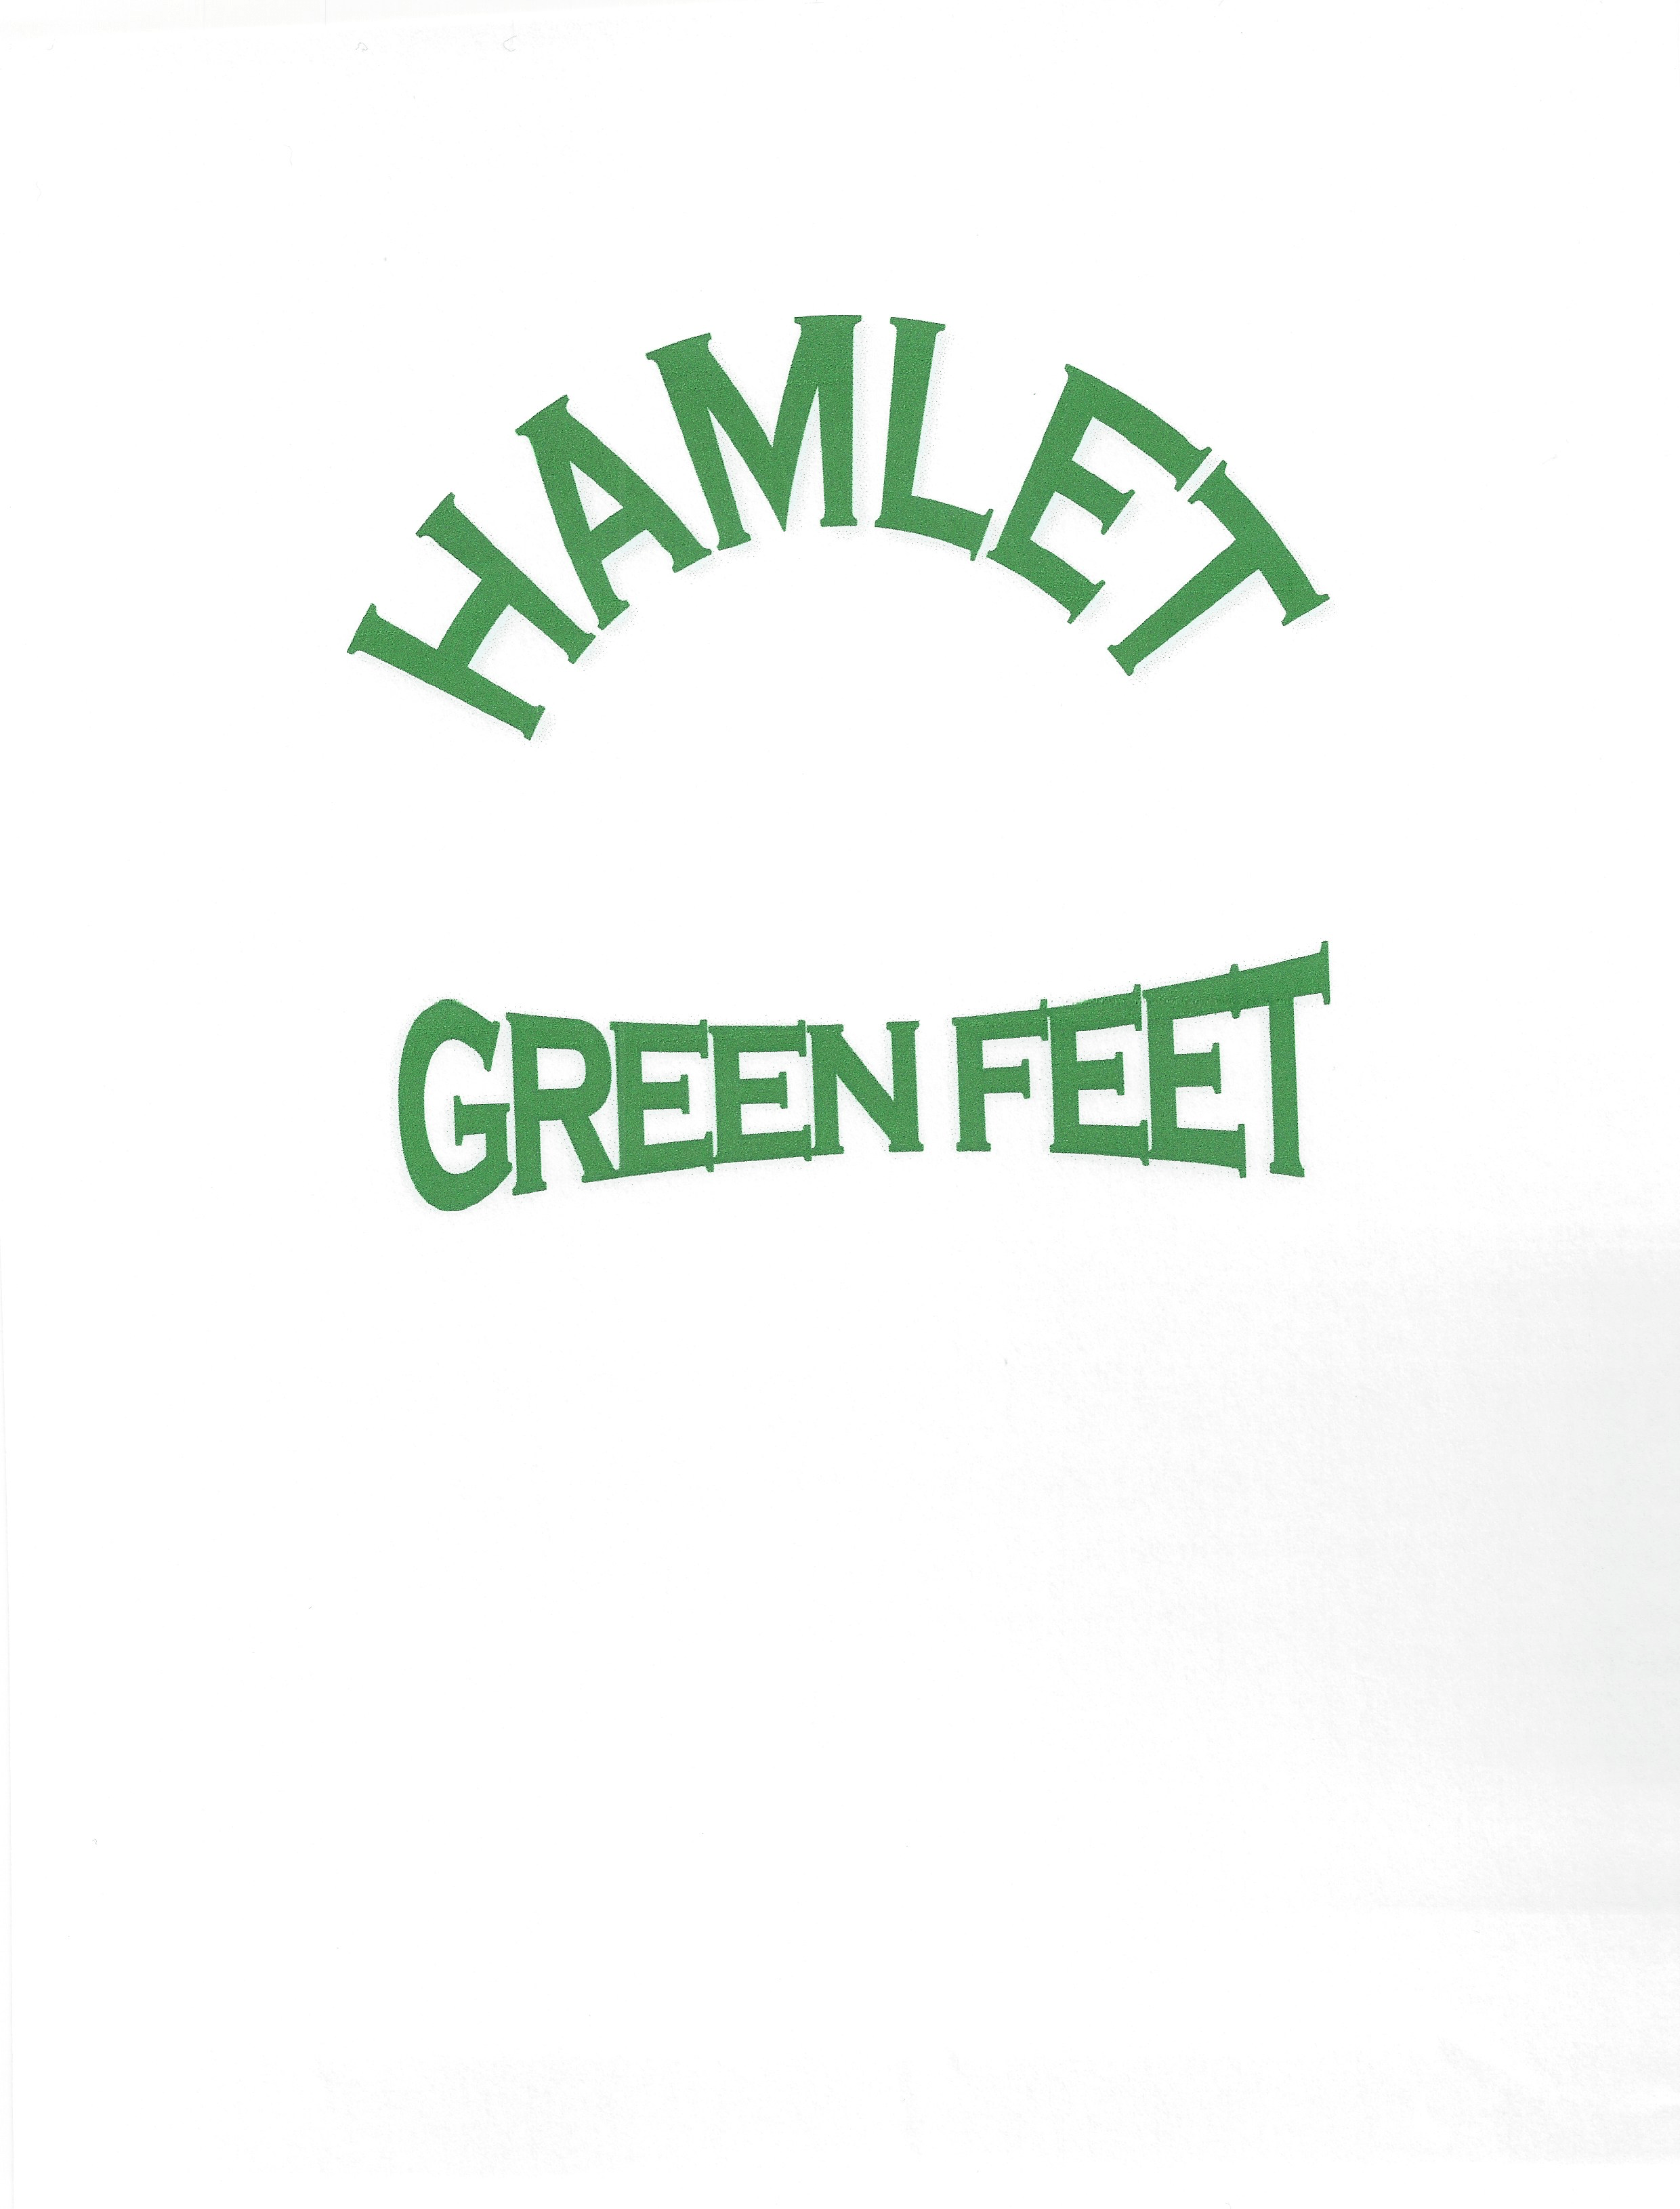 Hamlet Logo - Hamlet Logo Words Only. Free Image clip art